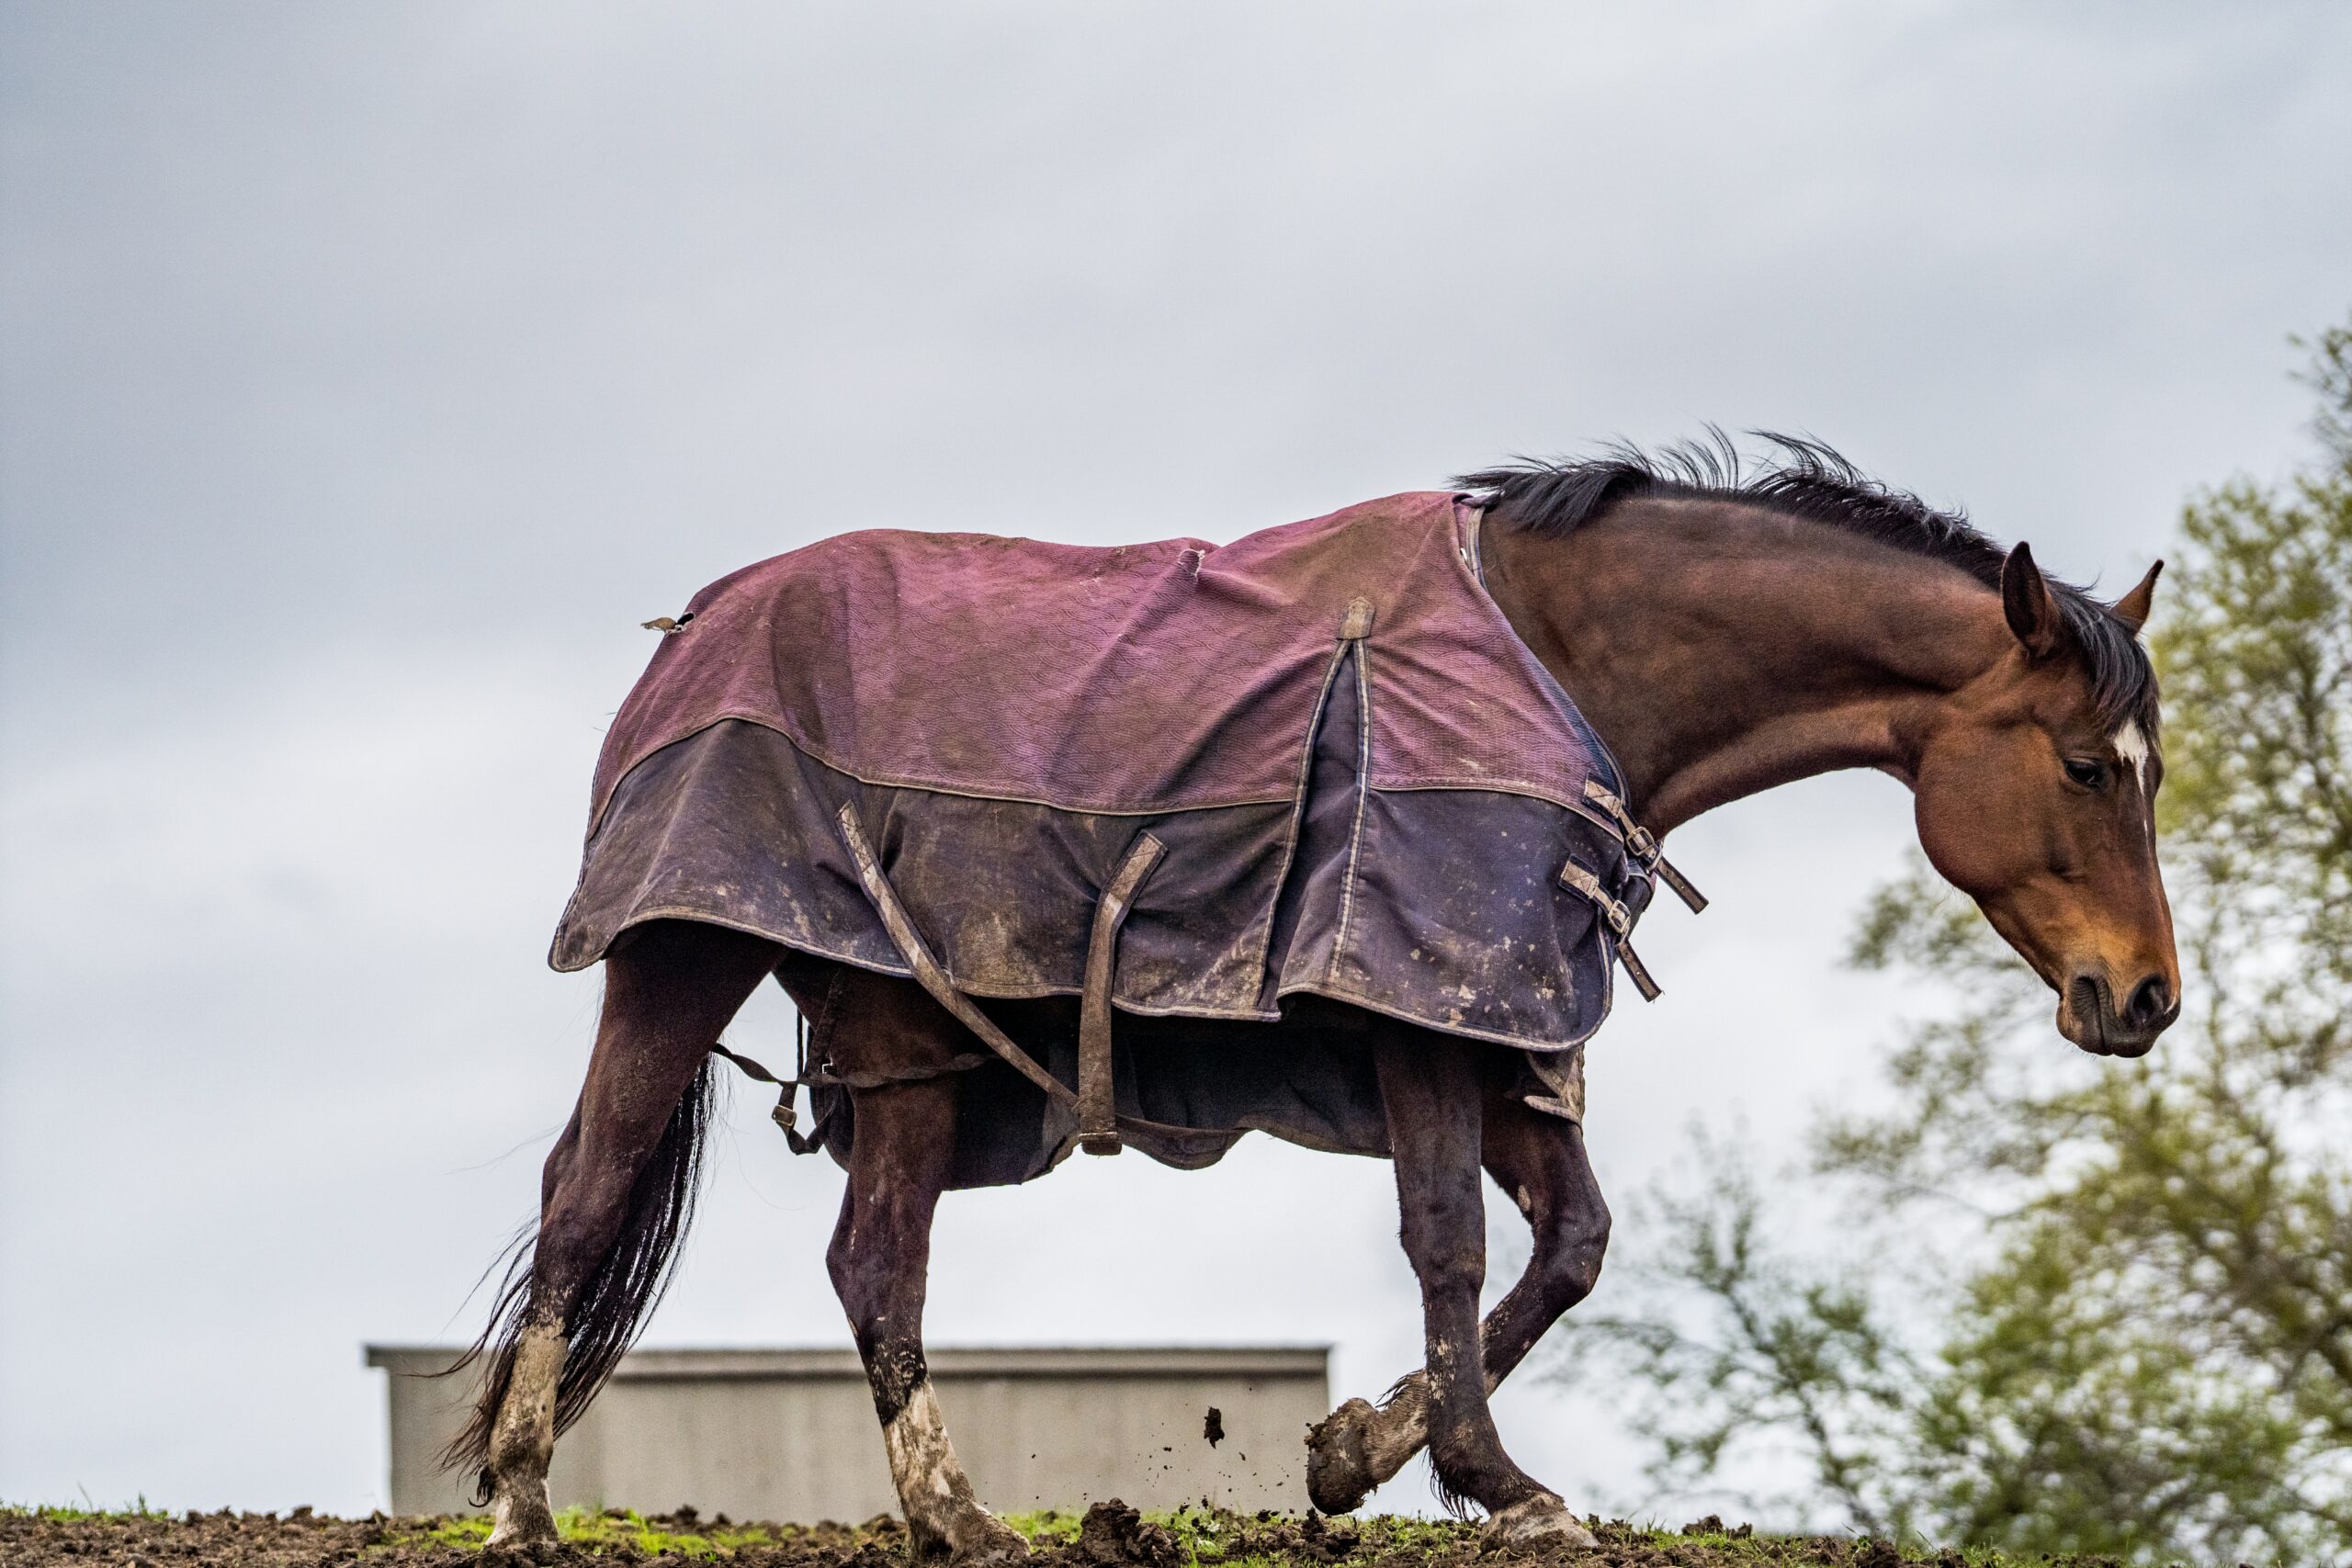 Do Horses Need Blankets in the Rain?